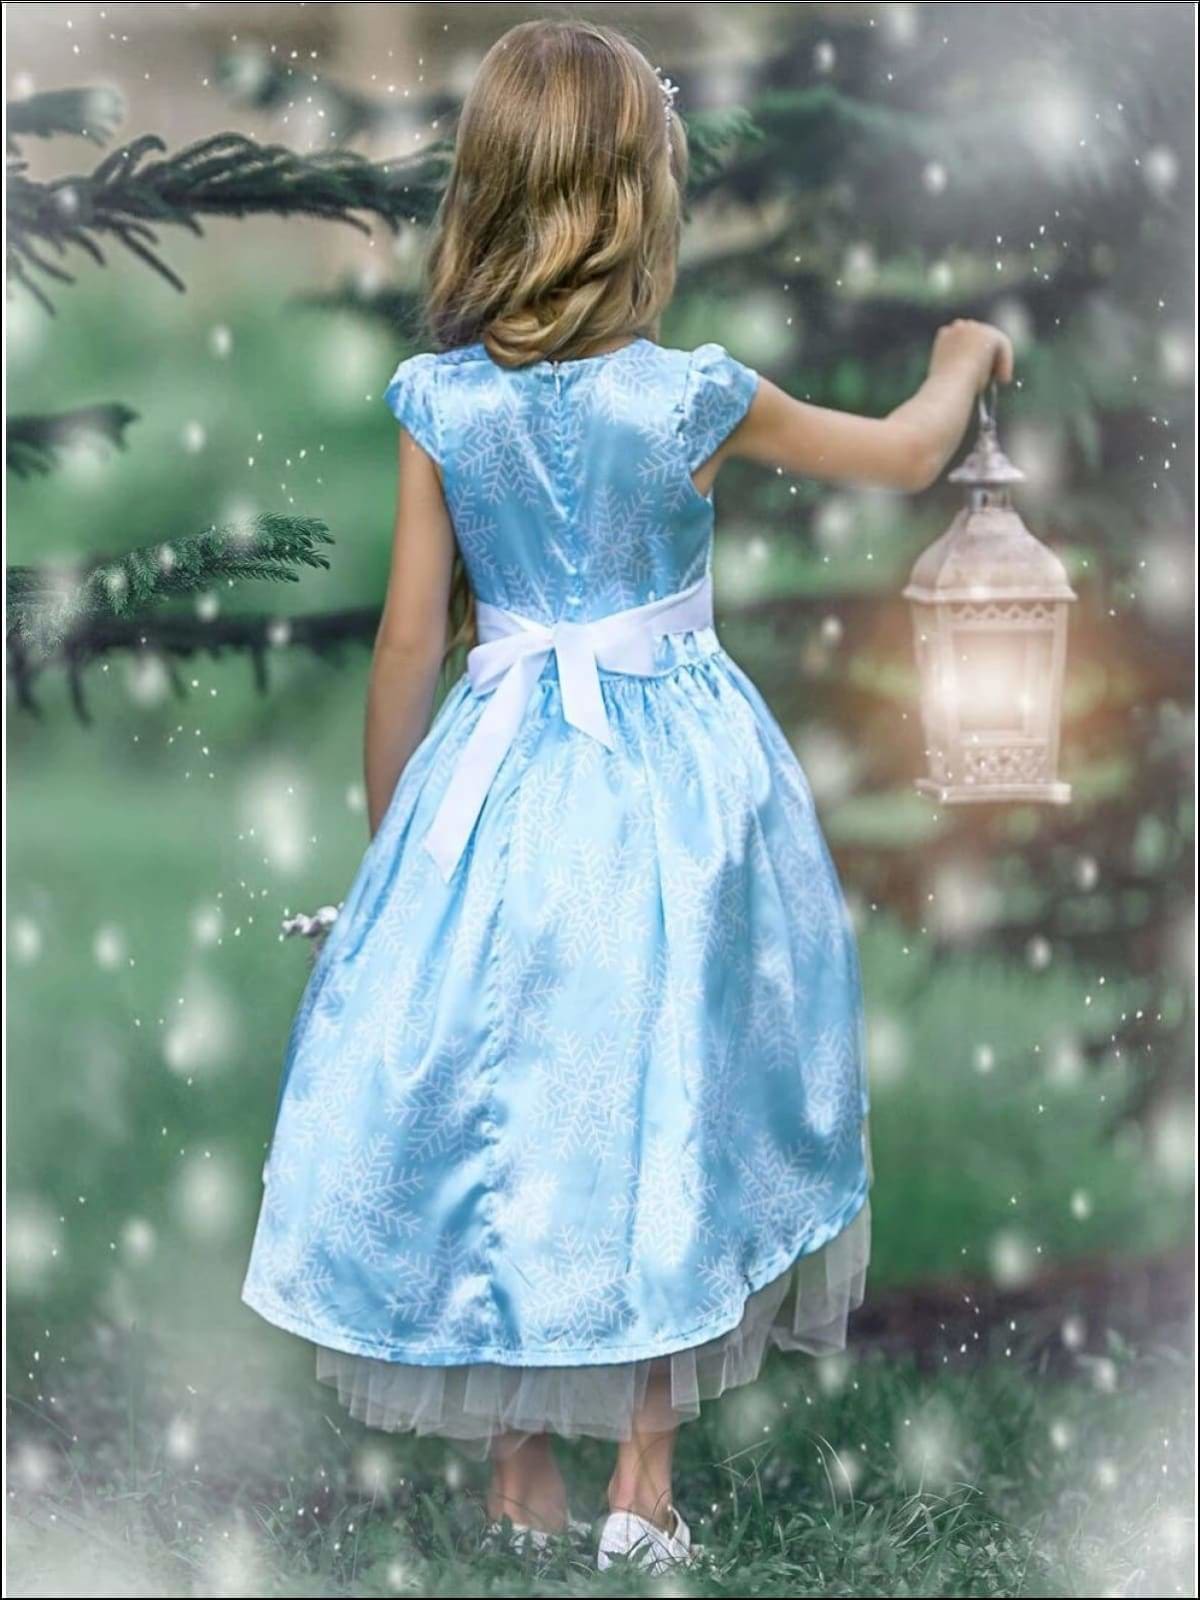 Mia Belle Girls Snowflake Cap Sleeve Hi-Lo Holiday Dress